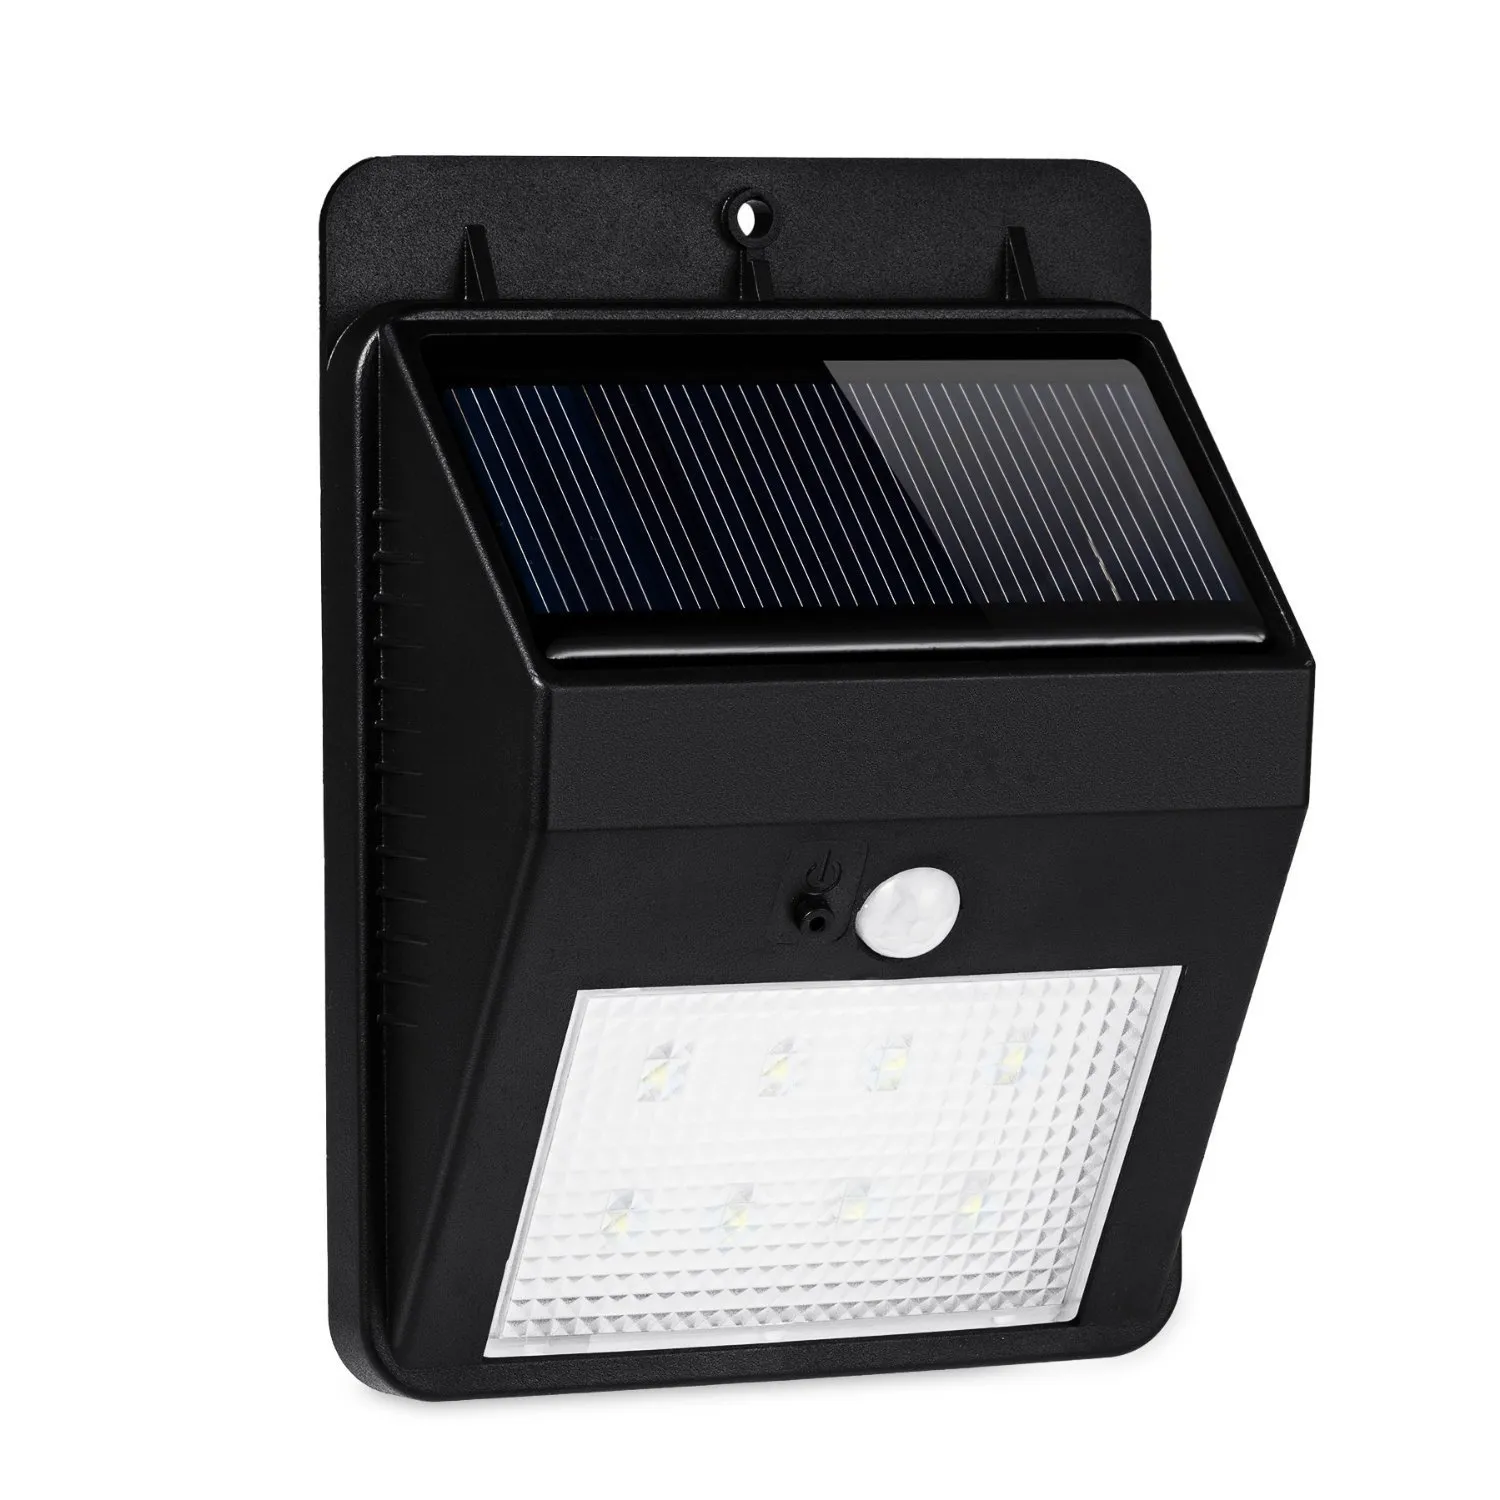 Solar Lamps 8 LED Outdoor Wireless Waterproof Security Motion Sensor Light for Patio, Deck, Yard, Garden,Driveway